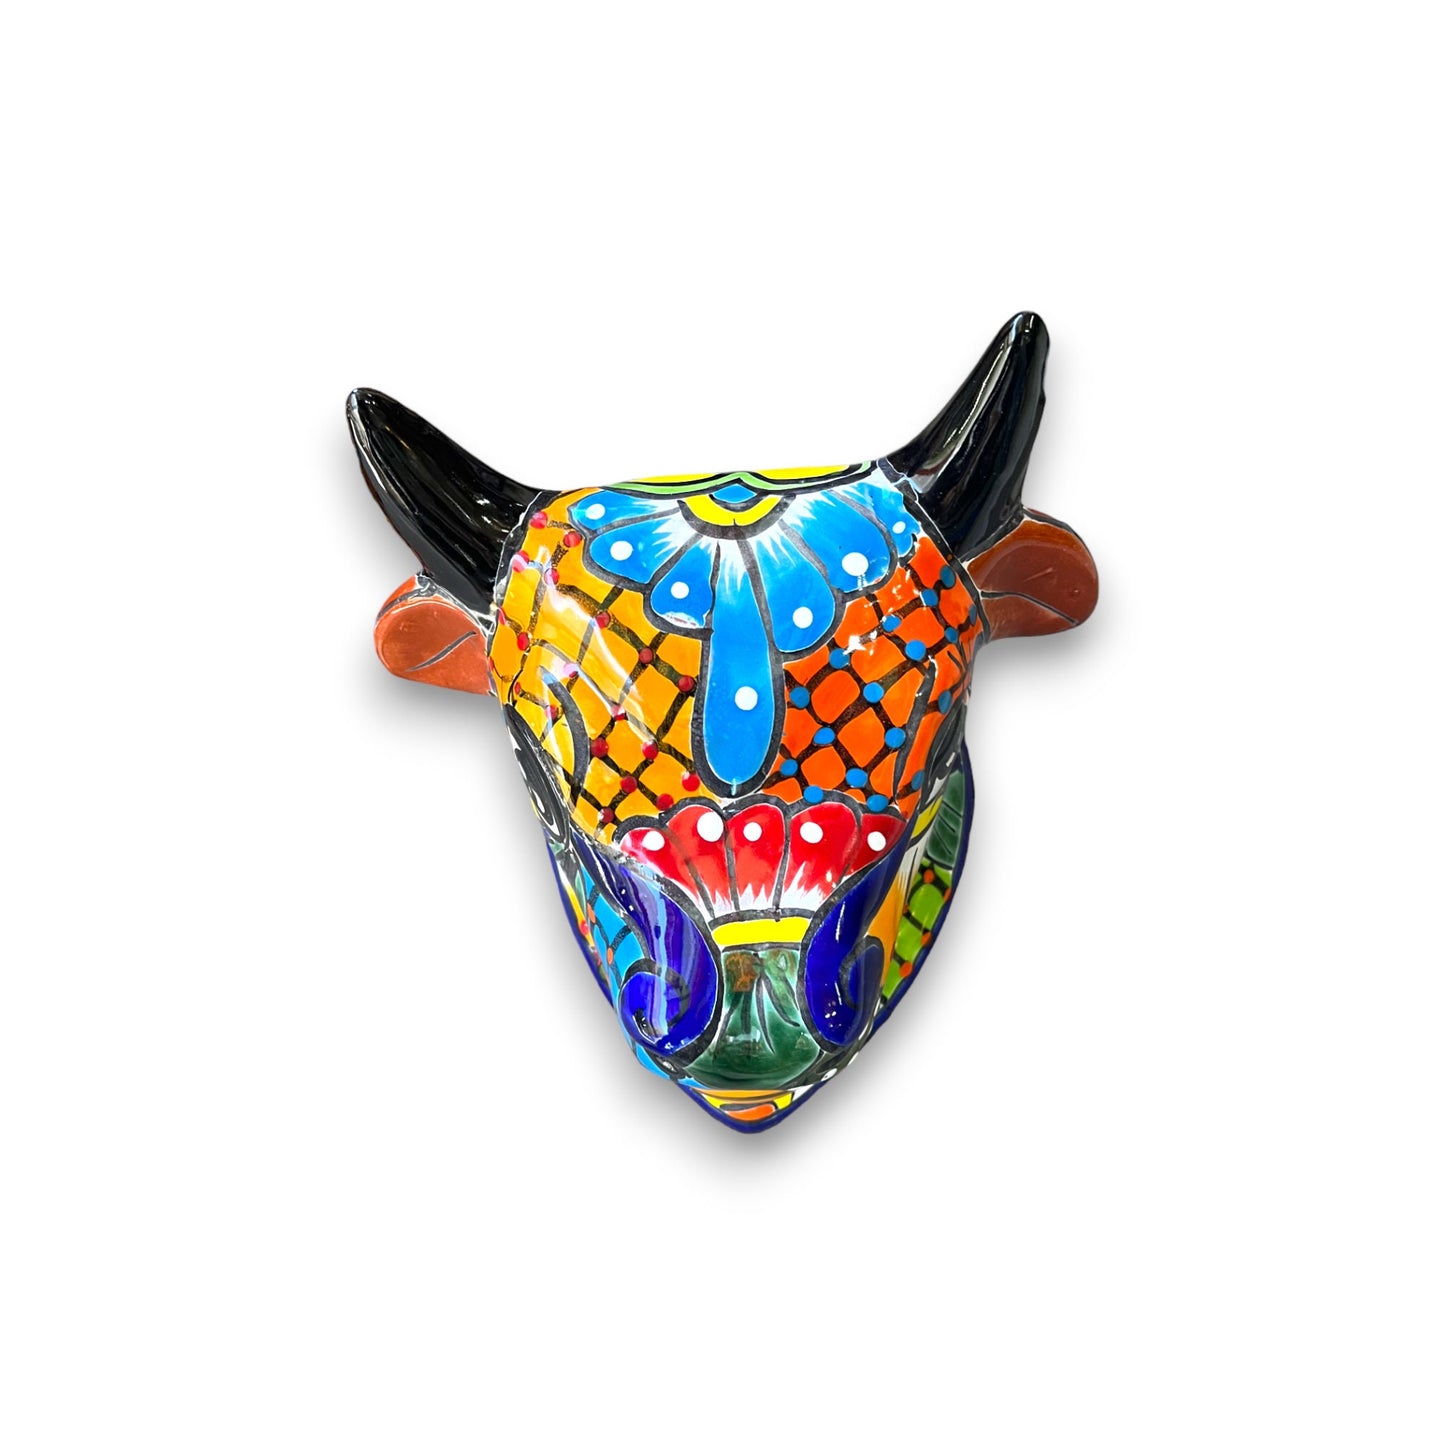 Talavera Bull Planter | Hand-Painted Mexican Bull Wall Art (Medium)